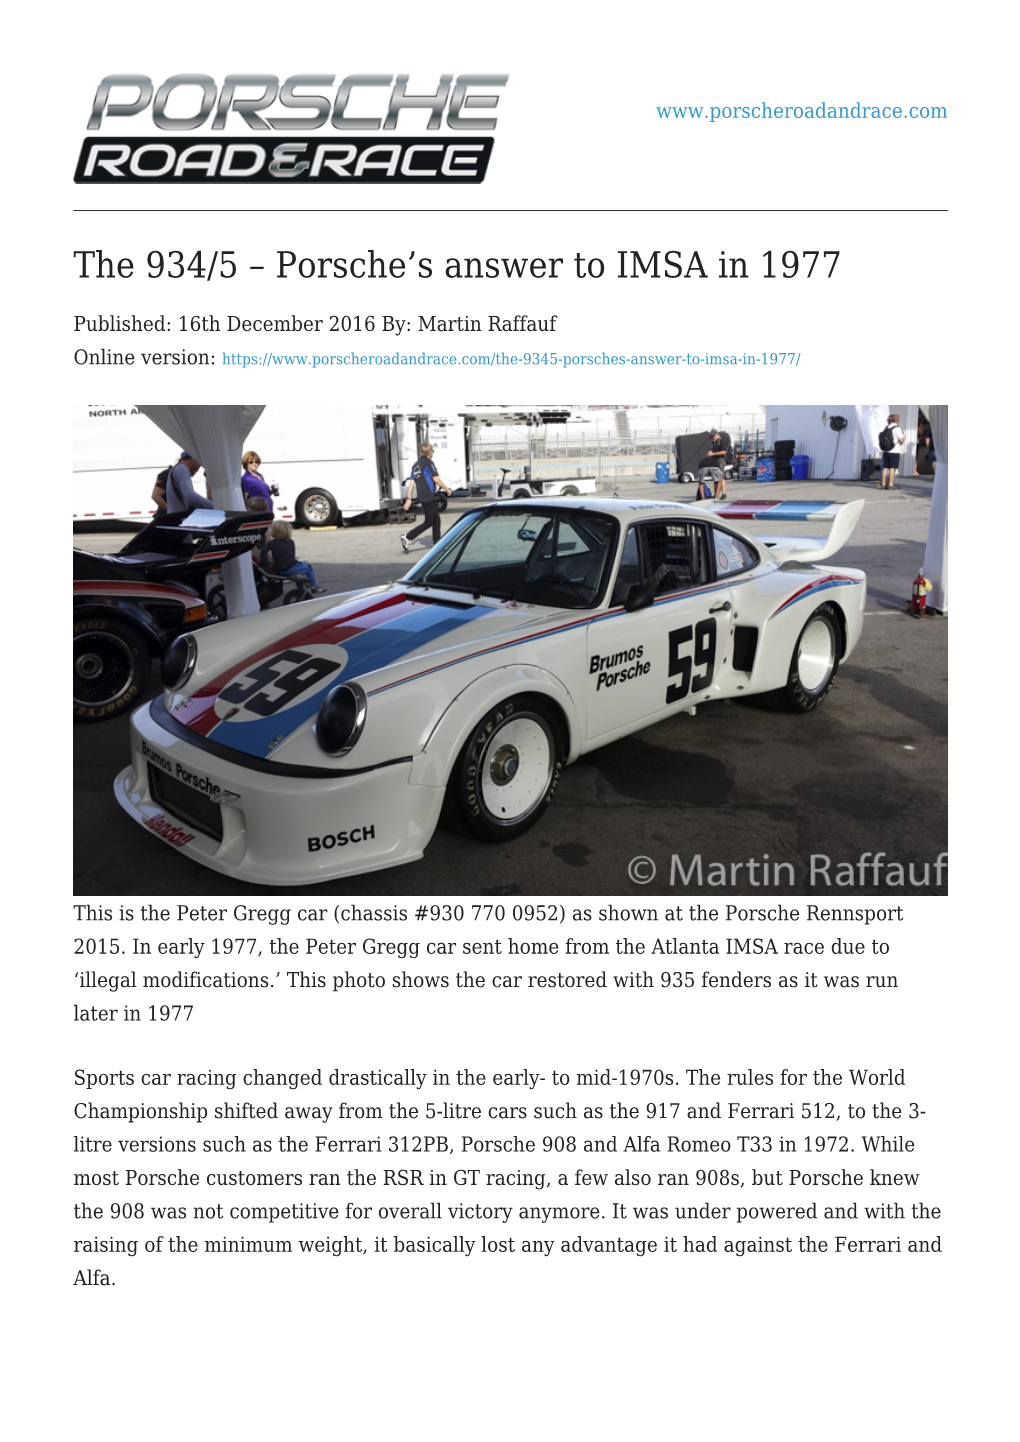 Porsche's Answer to IMSA in 1977